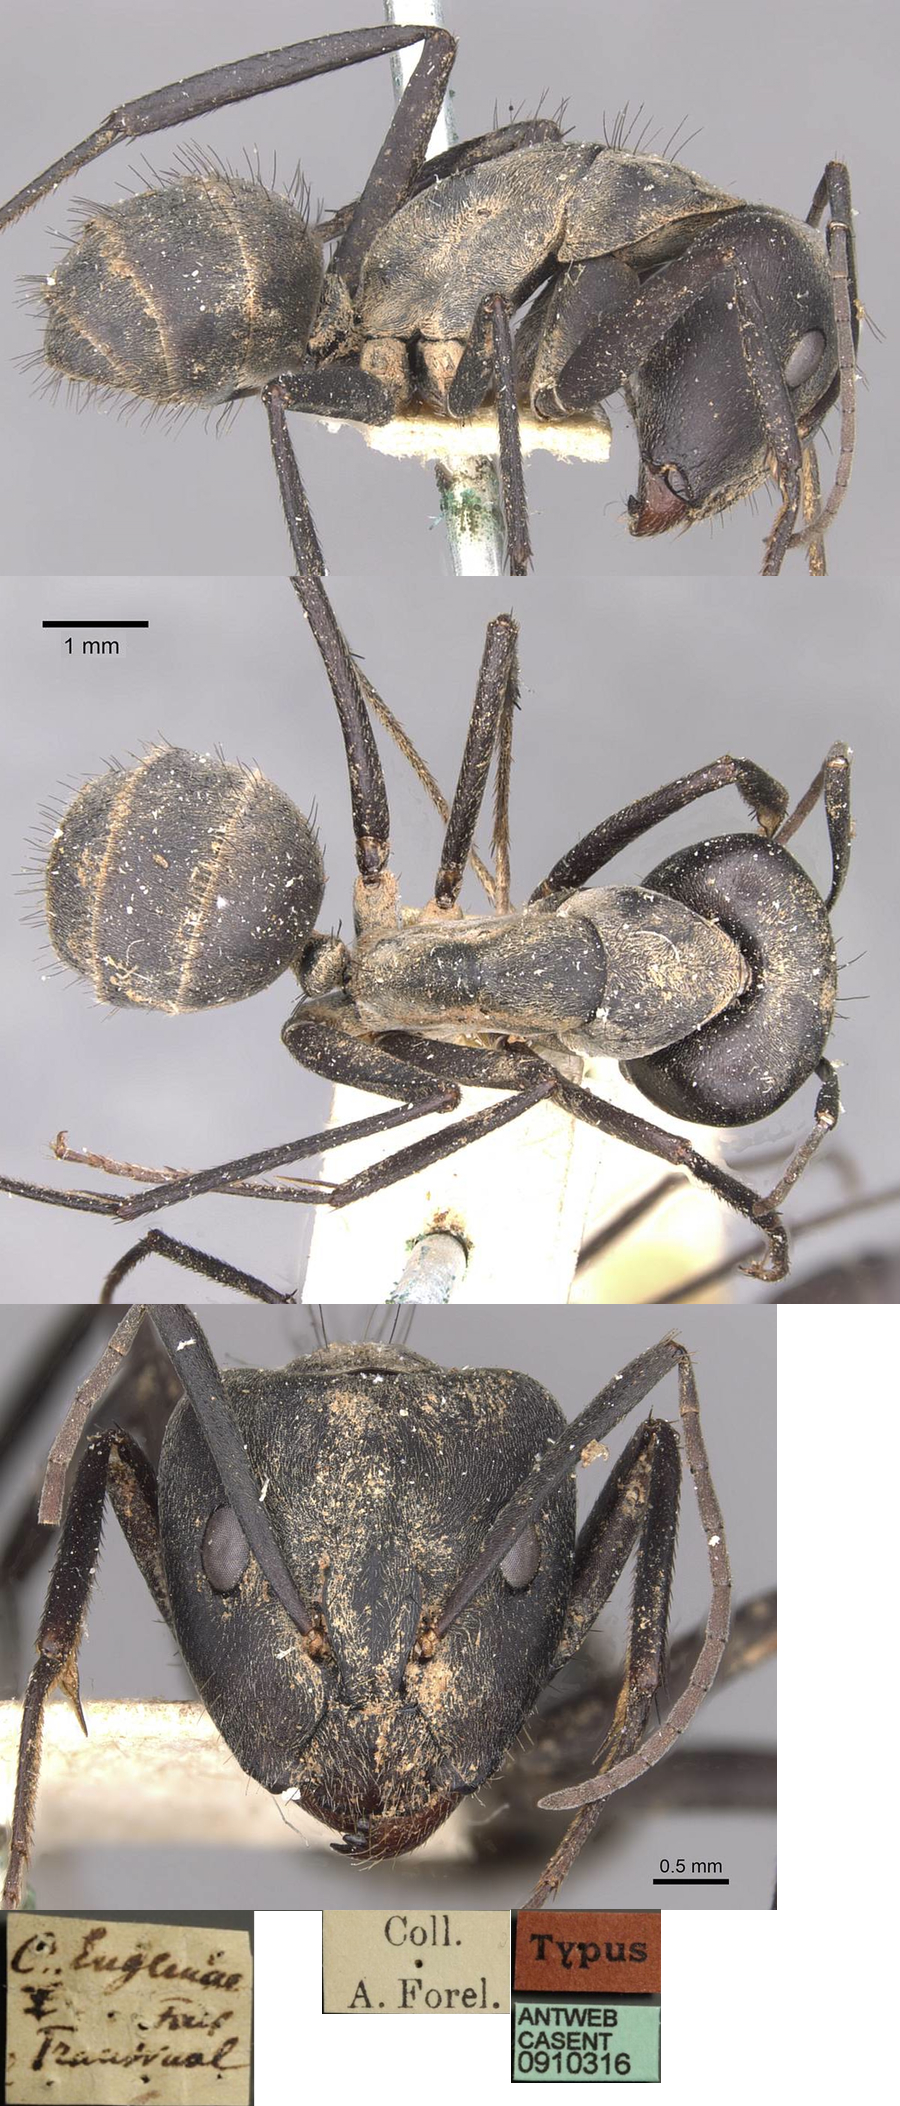 {Camponotus eugeniae major}